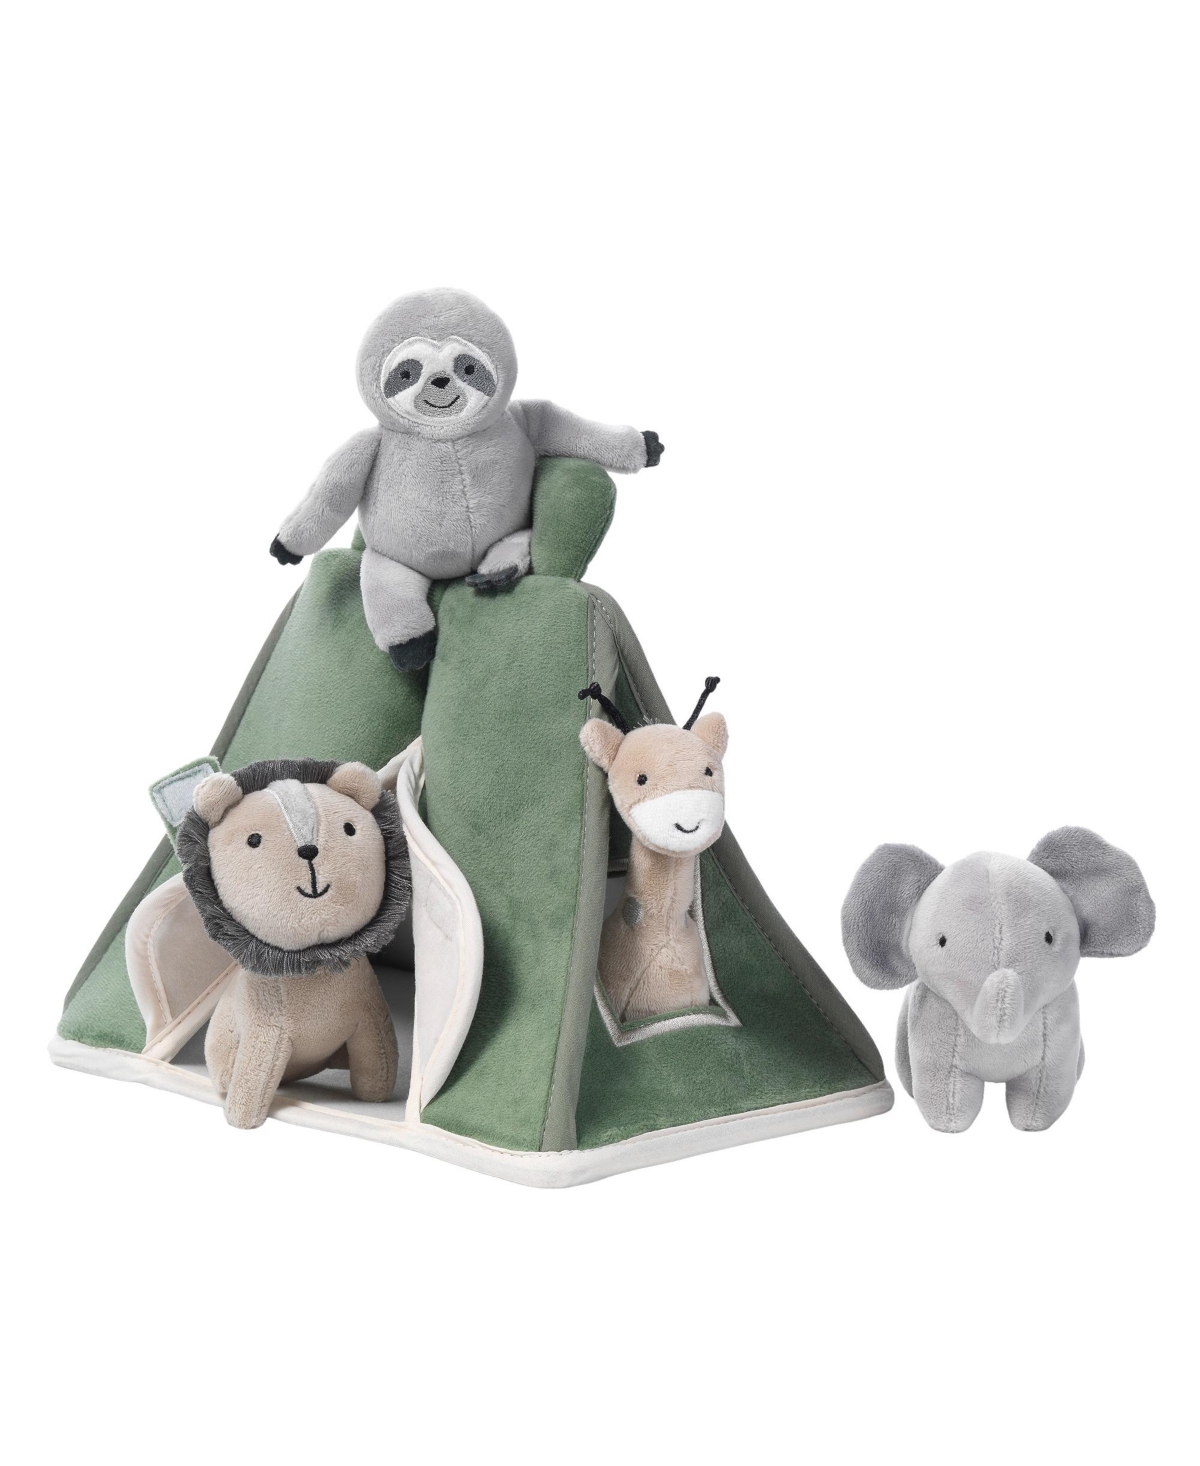 Lambs & Ivy Babies' Interactive Plush Safari/jungle Green Tent With Stuffed Animal Toys